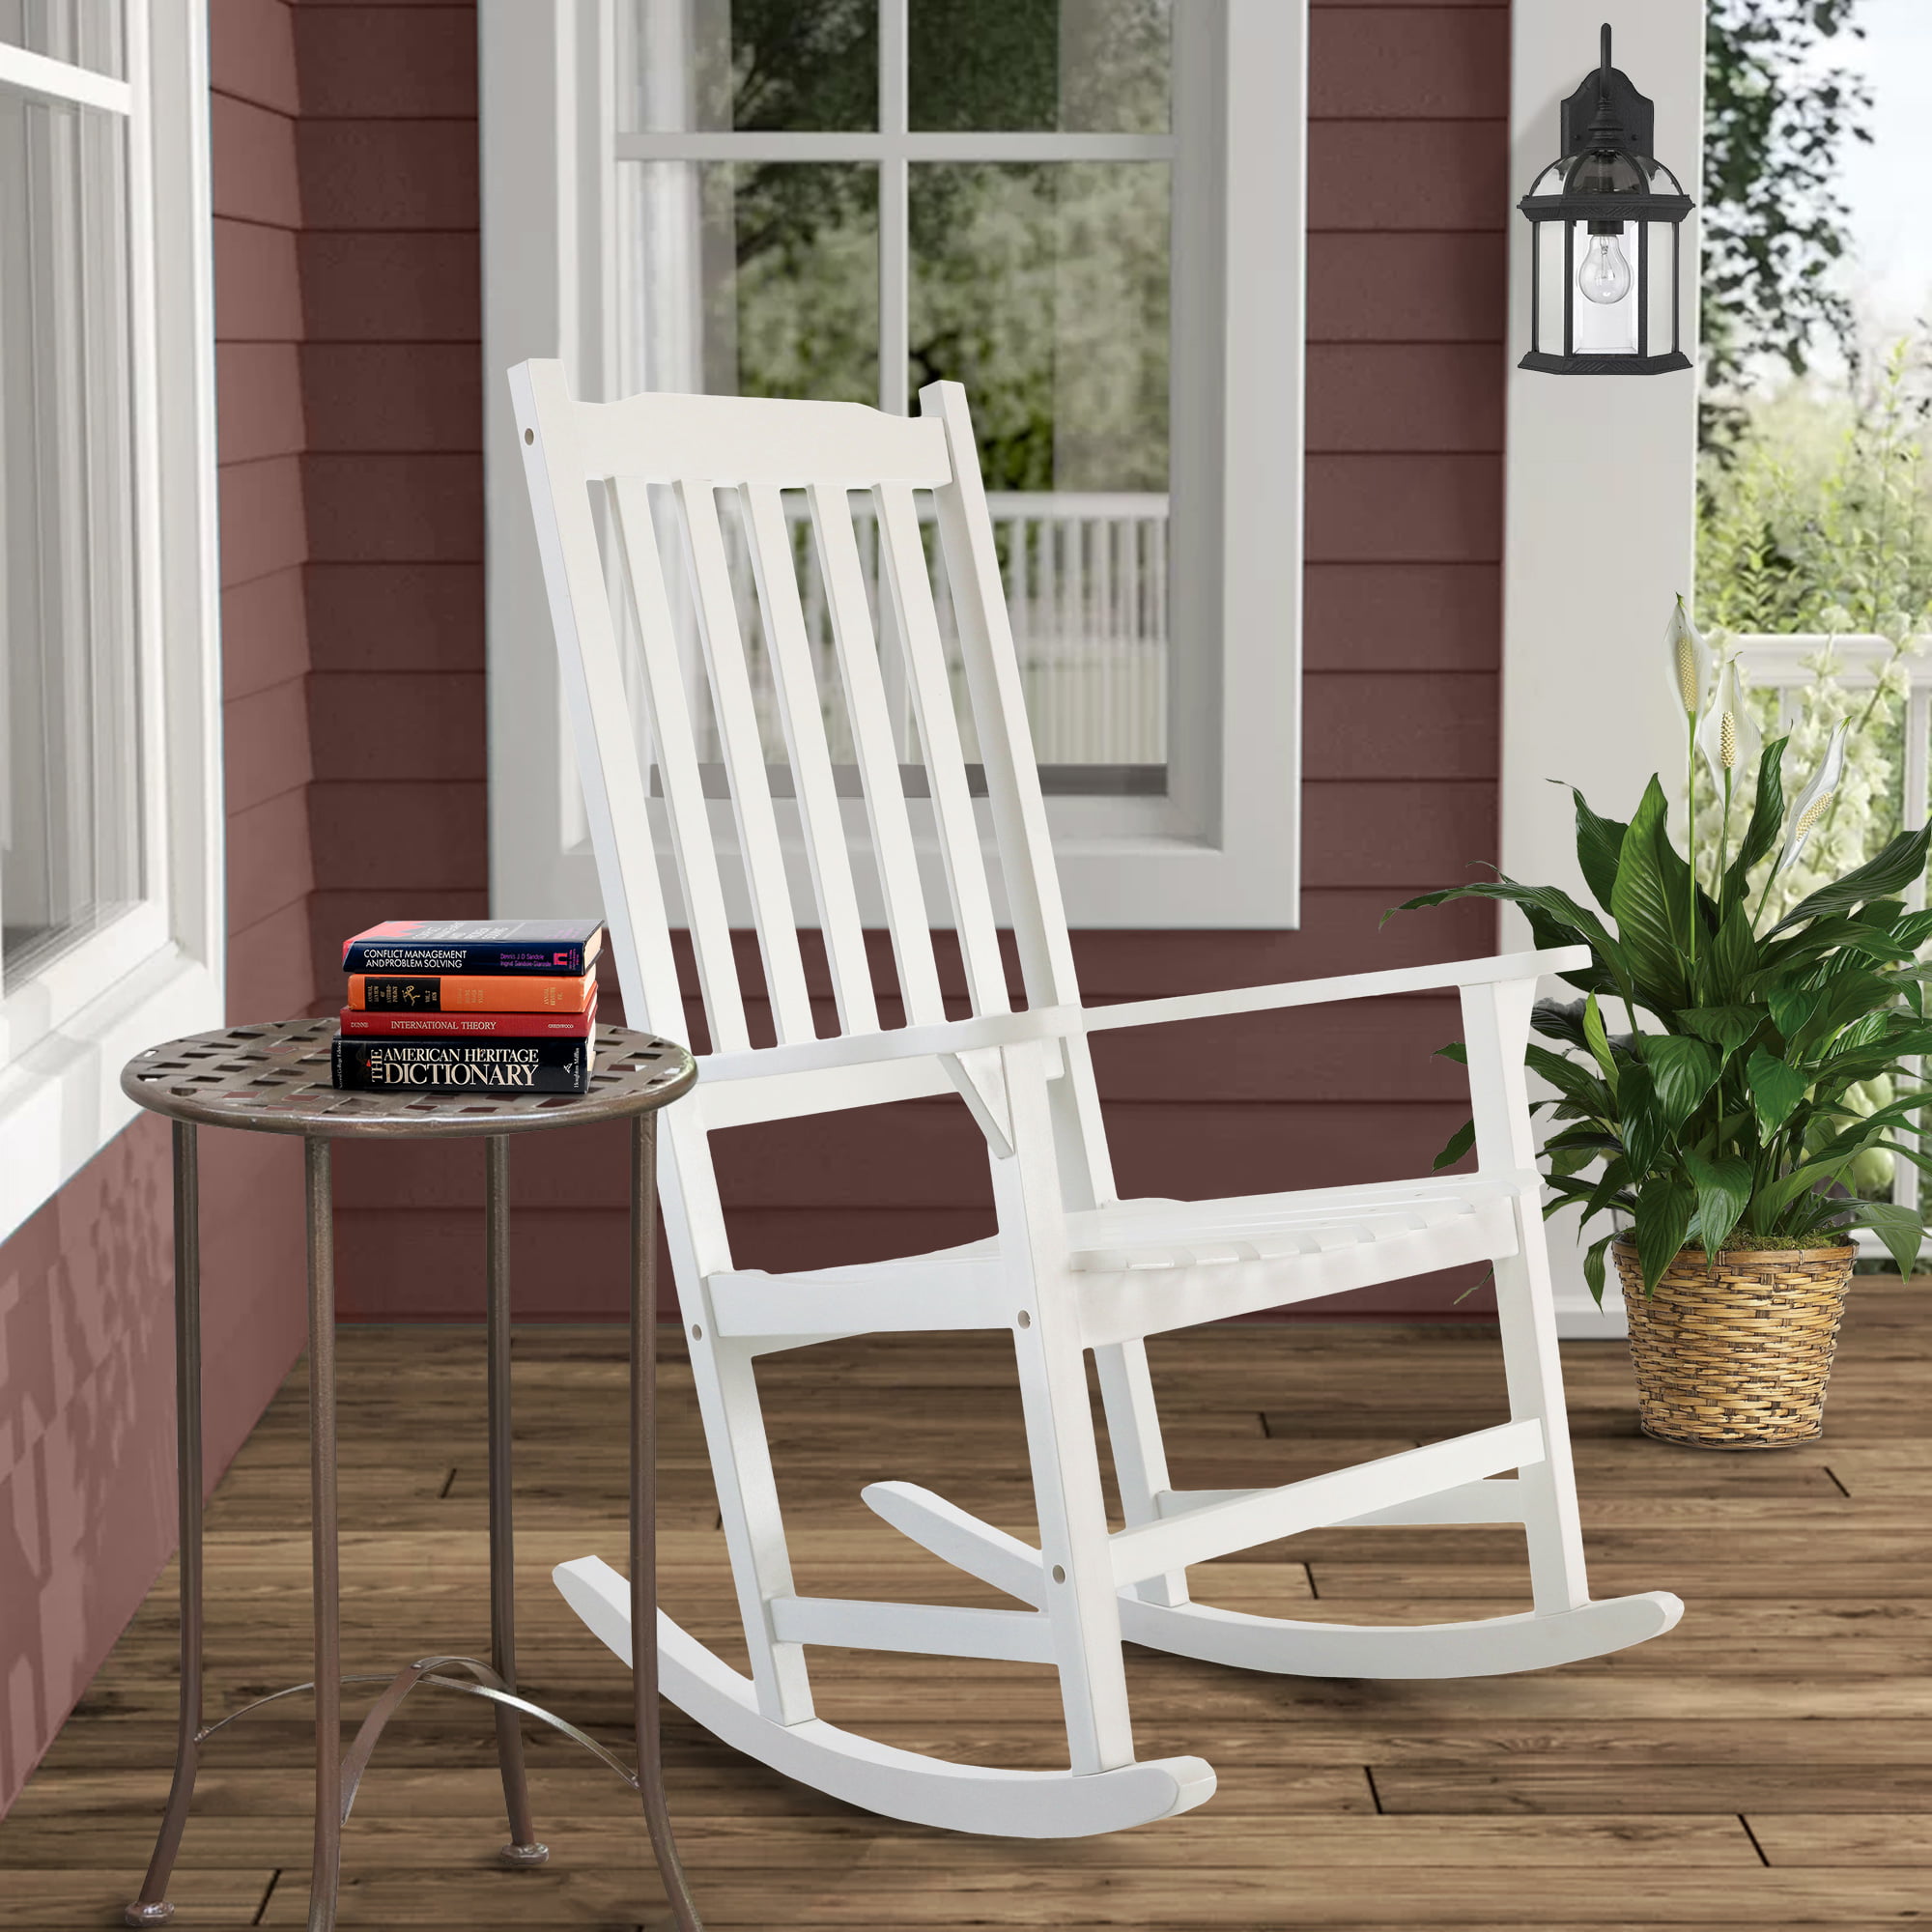 Wooden Rocking Chair, White Rocking Chair Patio Furniture, Outdoor Furniture Yacht Club Rocker